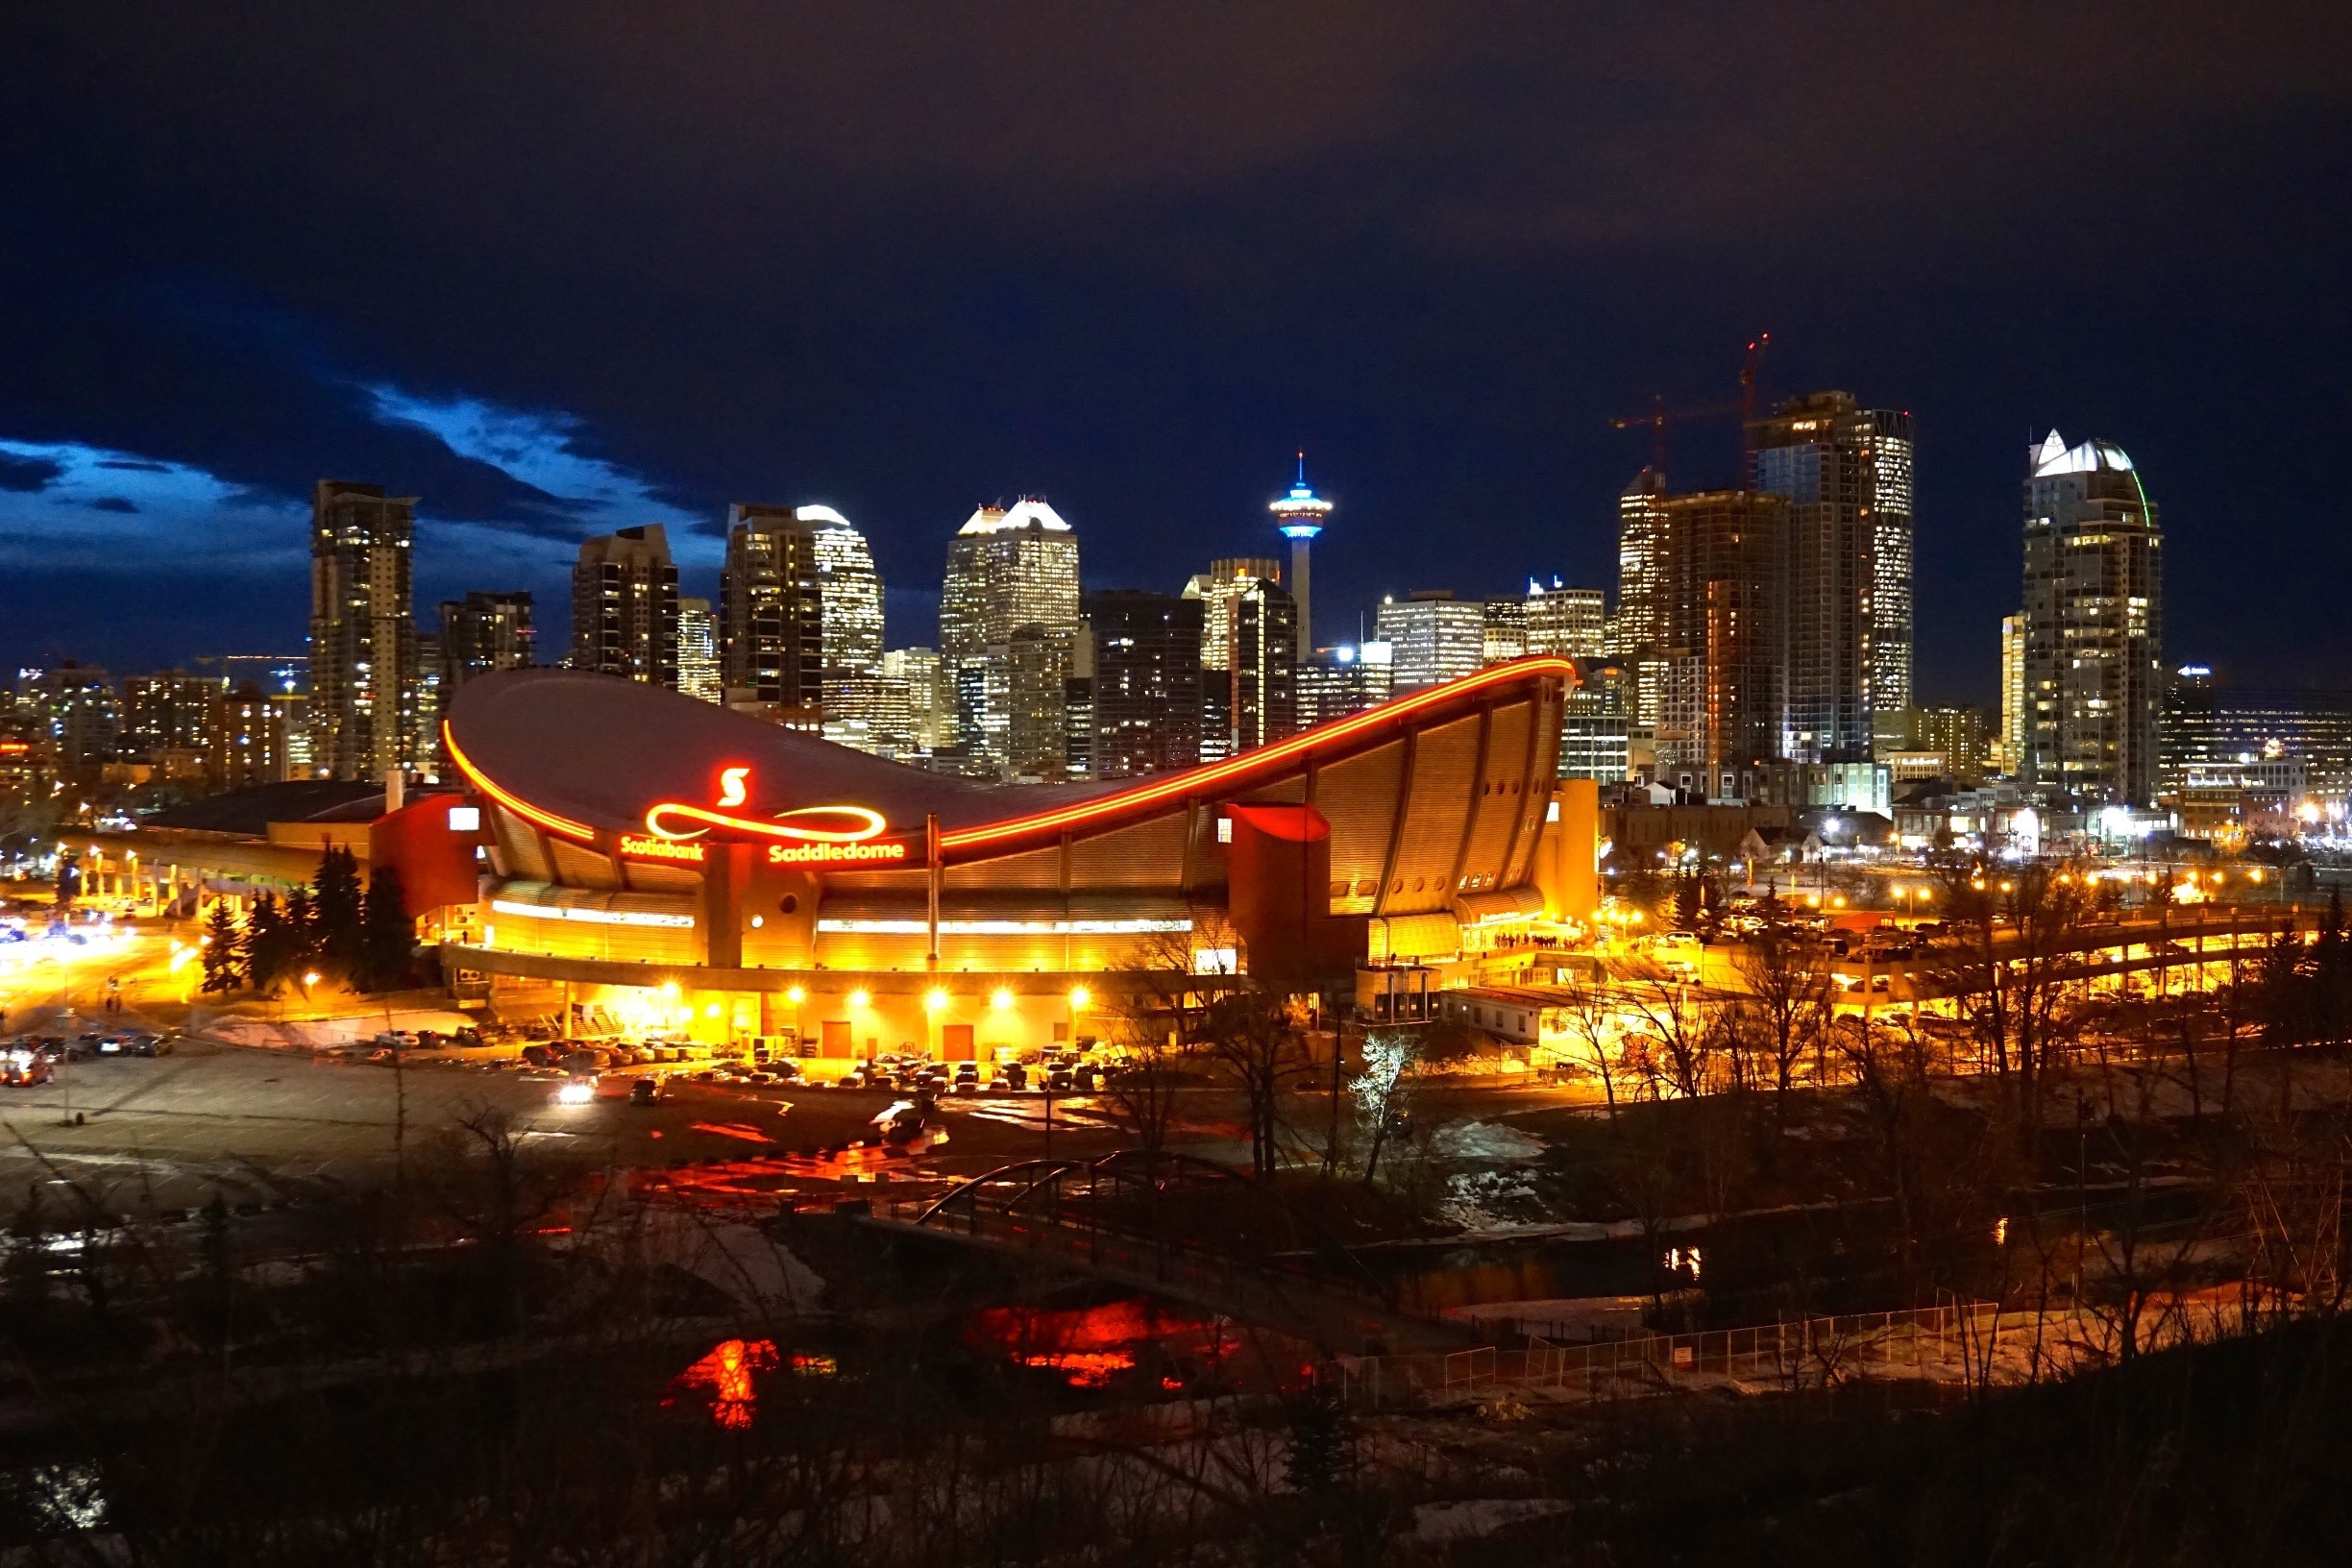 Saddledome Stadium And City Skyline At Sunset, Calgary, Alberta